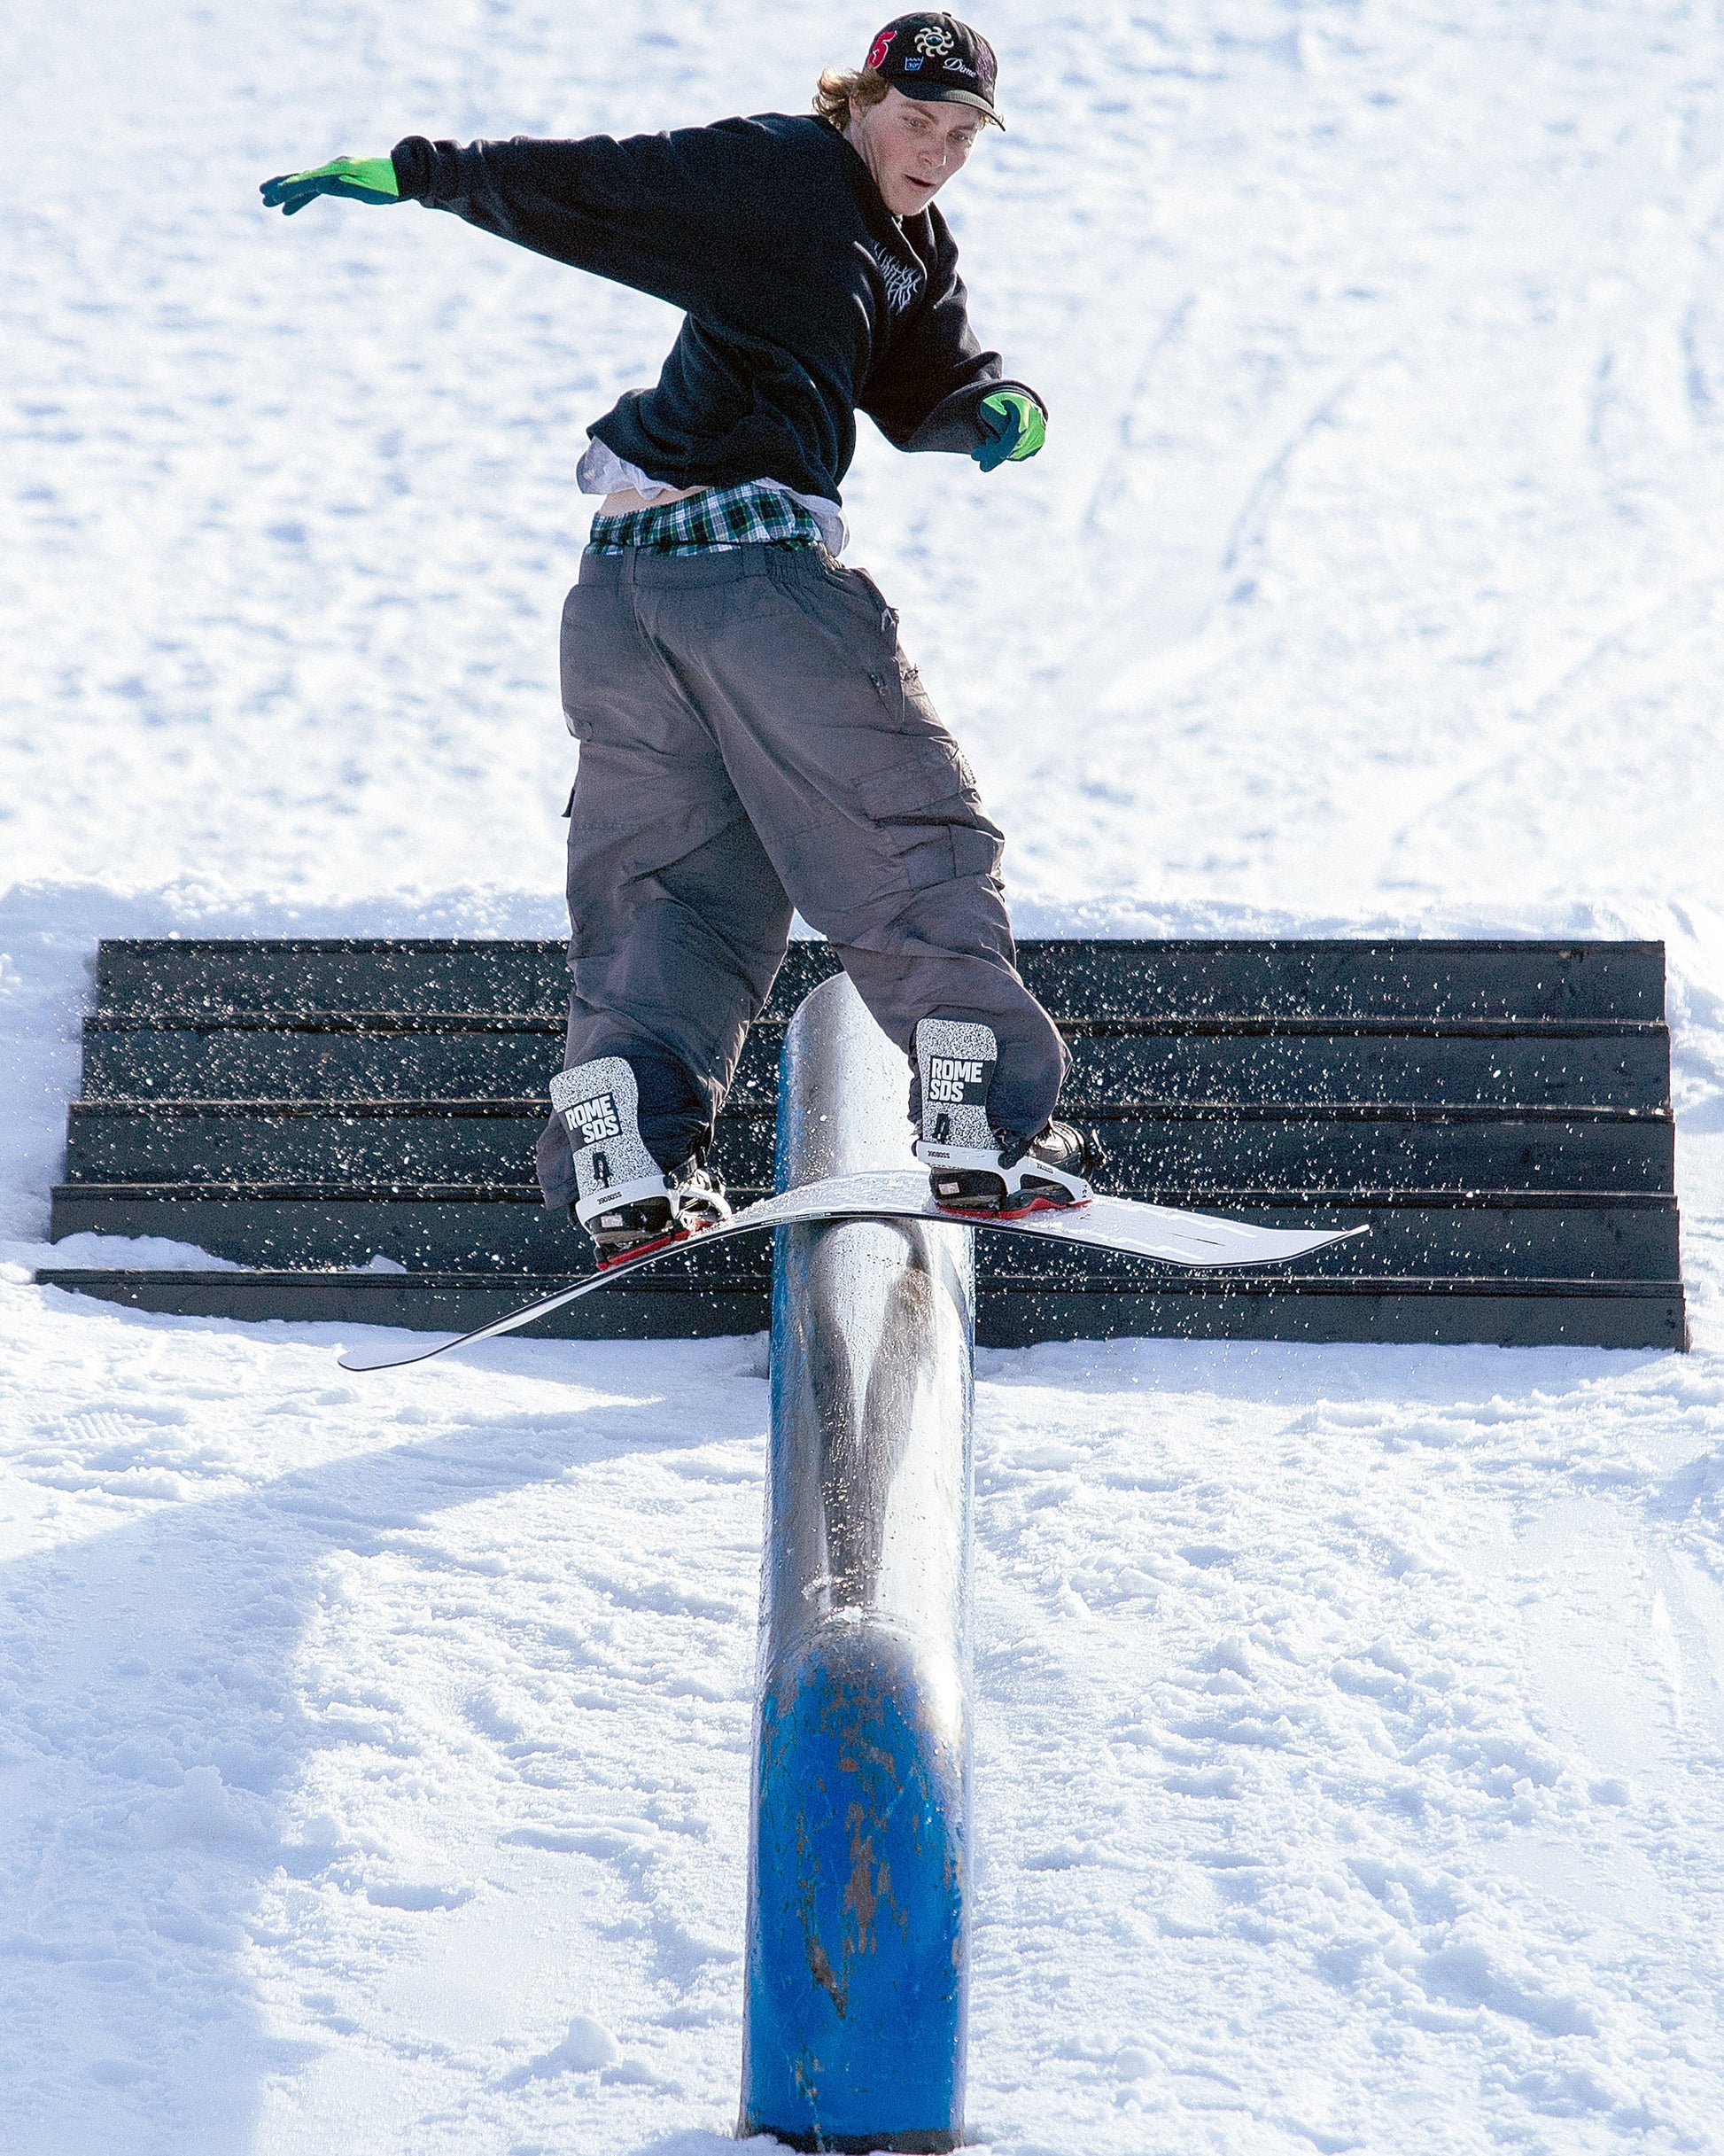 Snowboard Bindings - Snowboard Equipment - Mechanics of Snowboarding